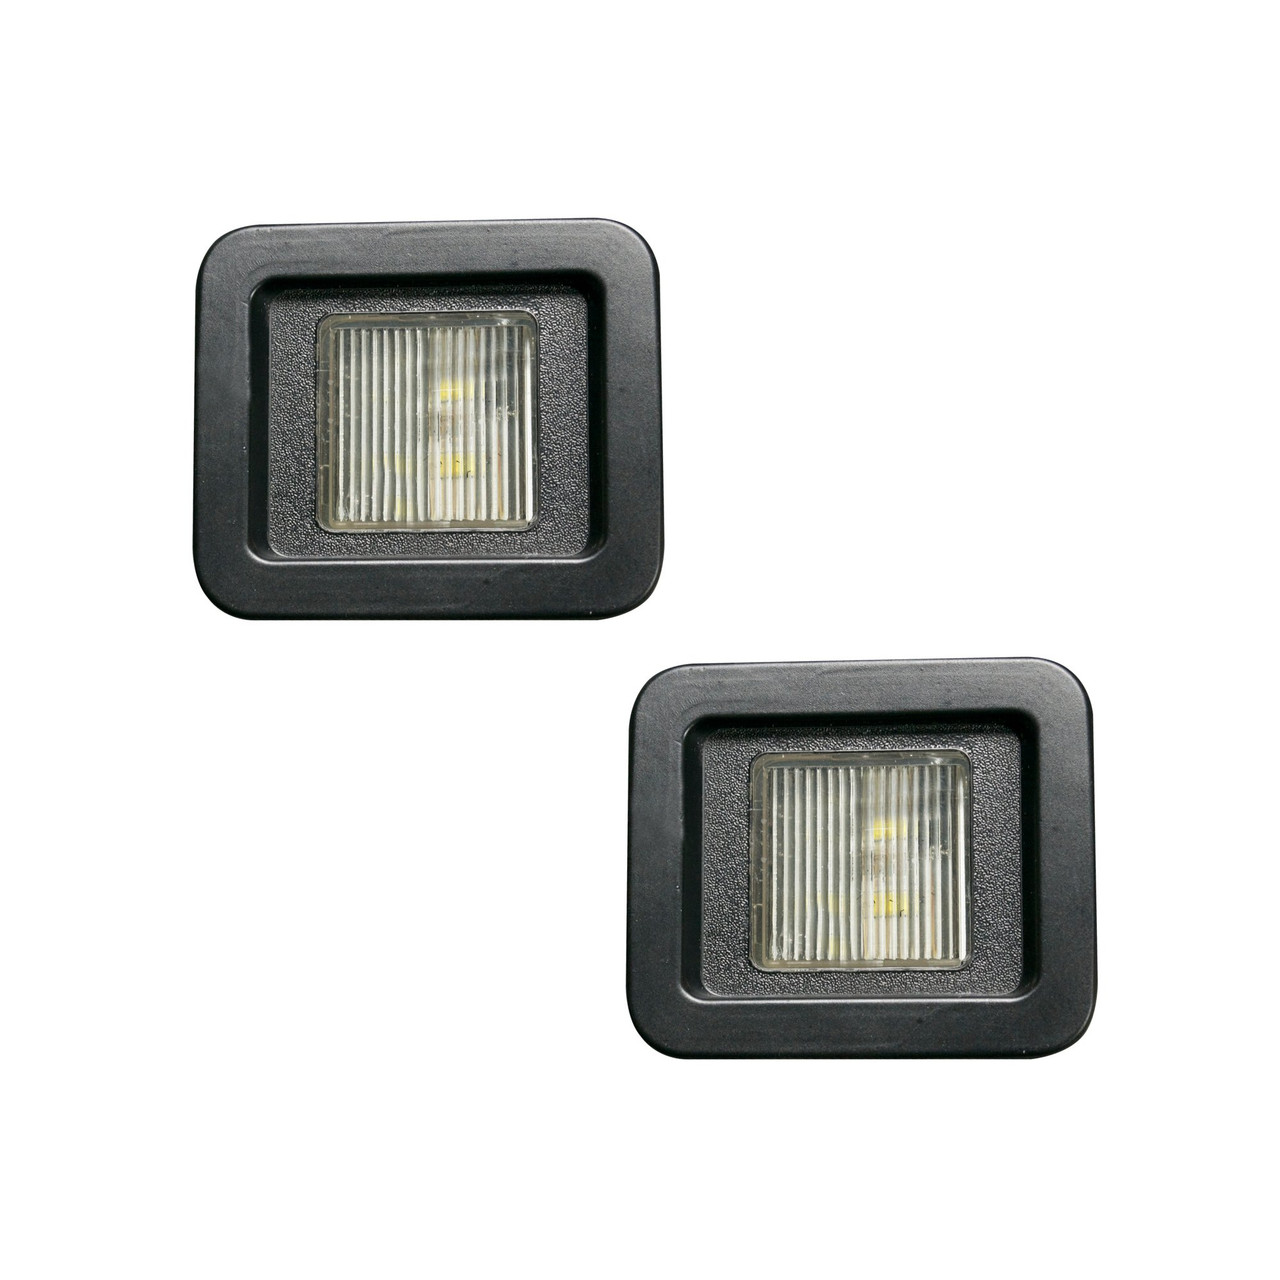 Recon LED License Plate Illumination Kit - 264905, White